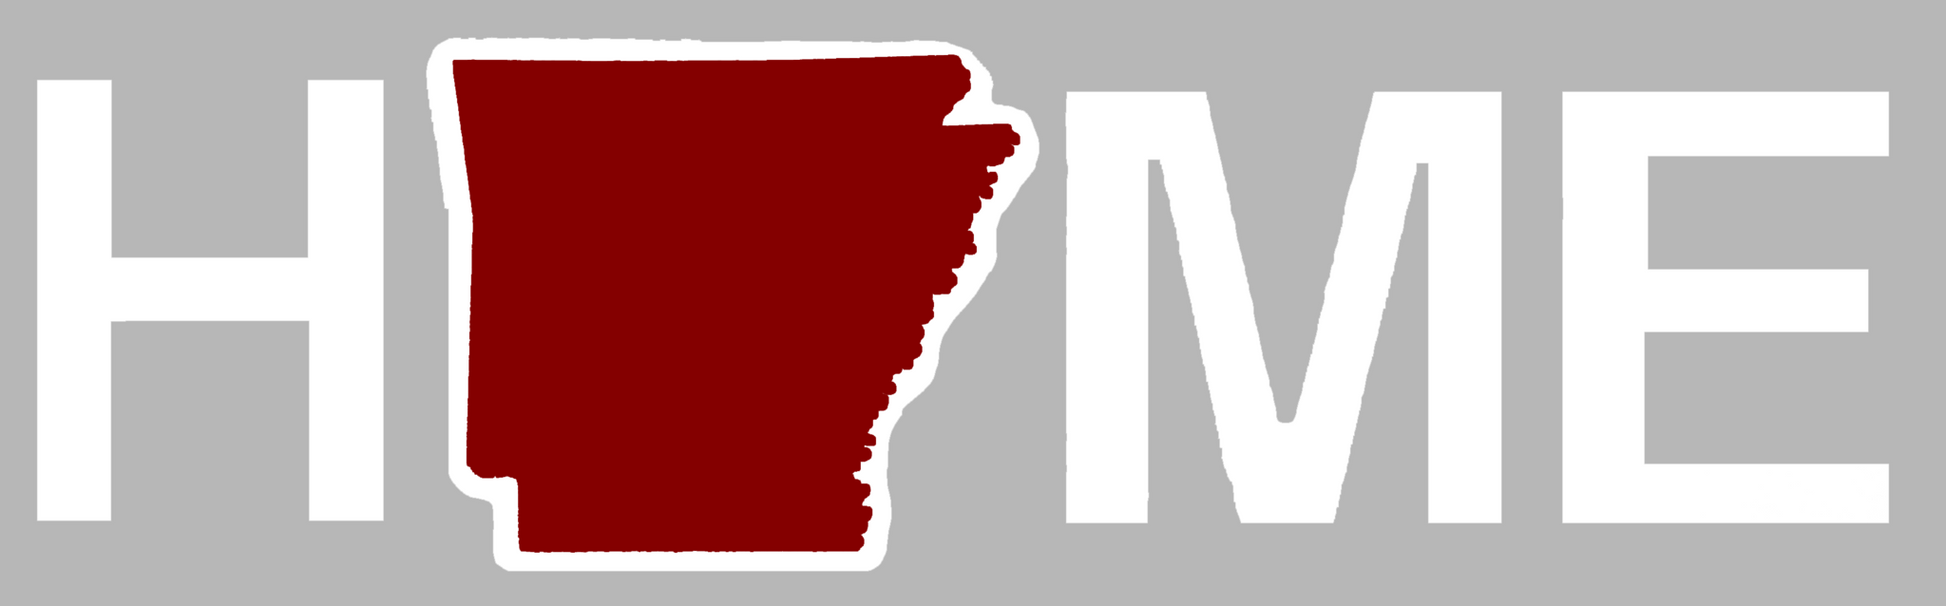 Arkansas Sticker | Red